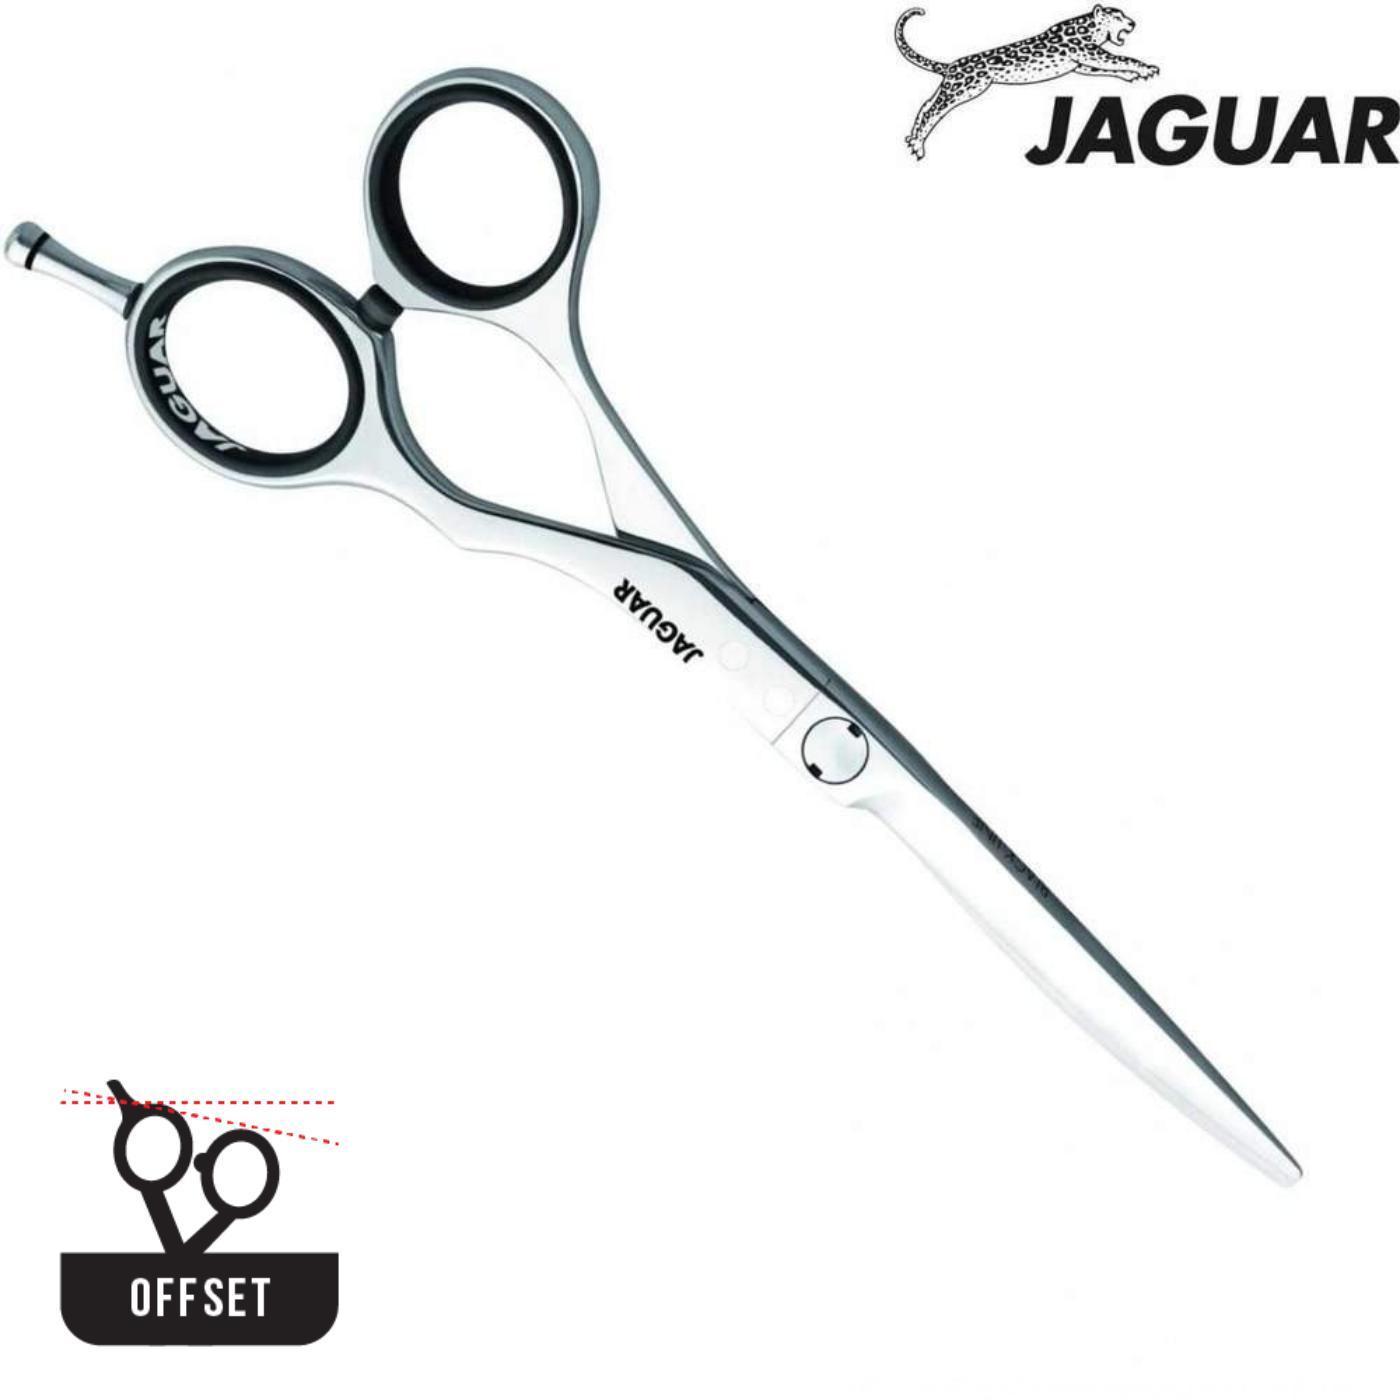 Jaguar Black Line Evolution Hair Cutting Scissors - Japan Scissors USA